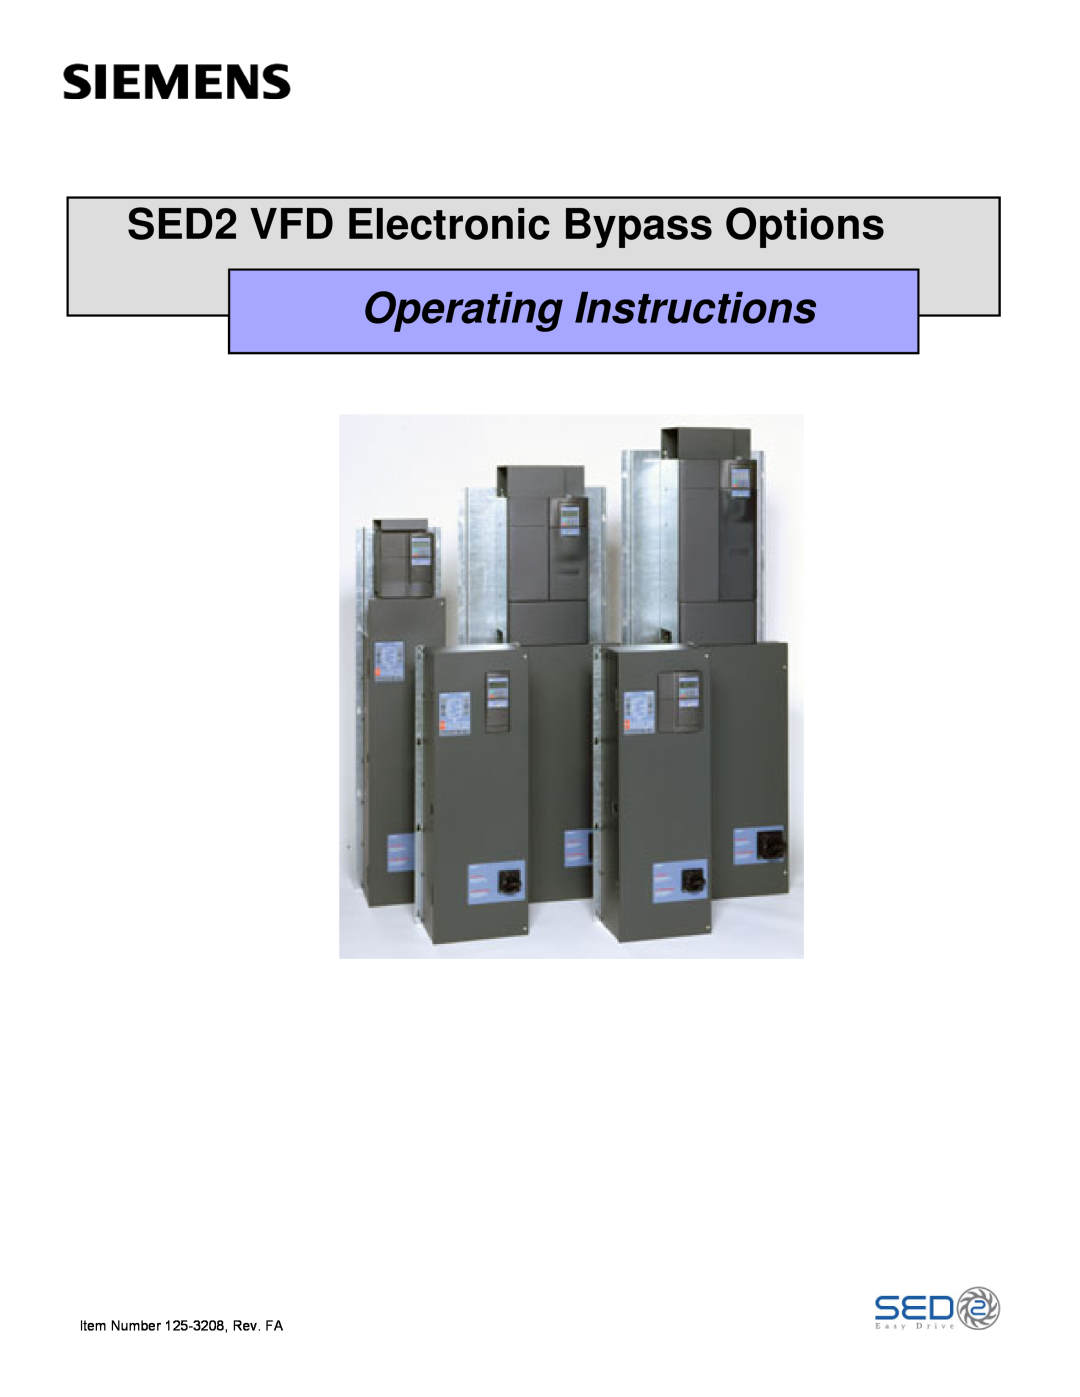 Siemens 125-3208 operating instructions SED2 VFD Electronic Bypass Options, Operating Instructions 